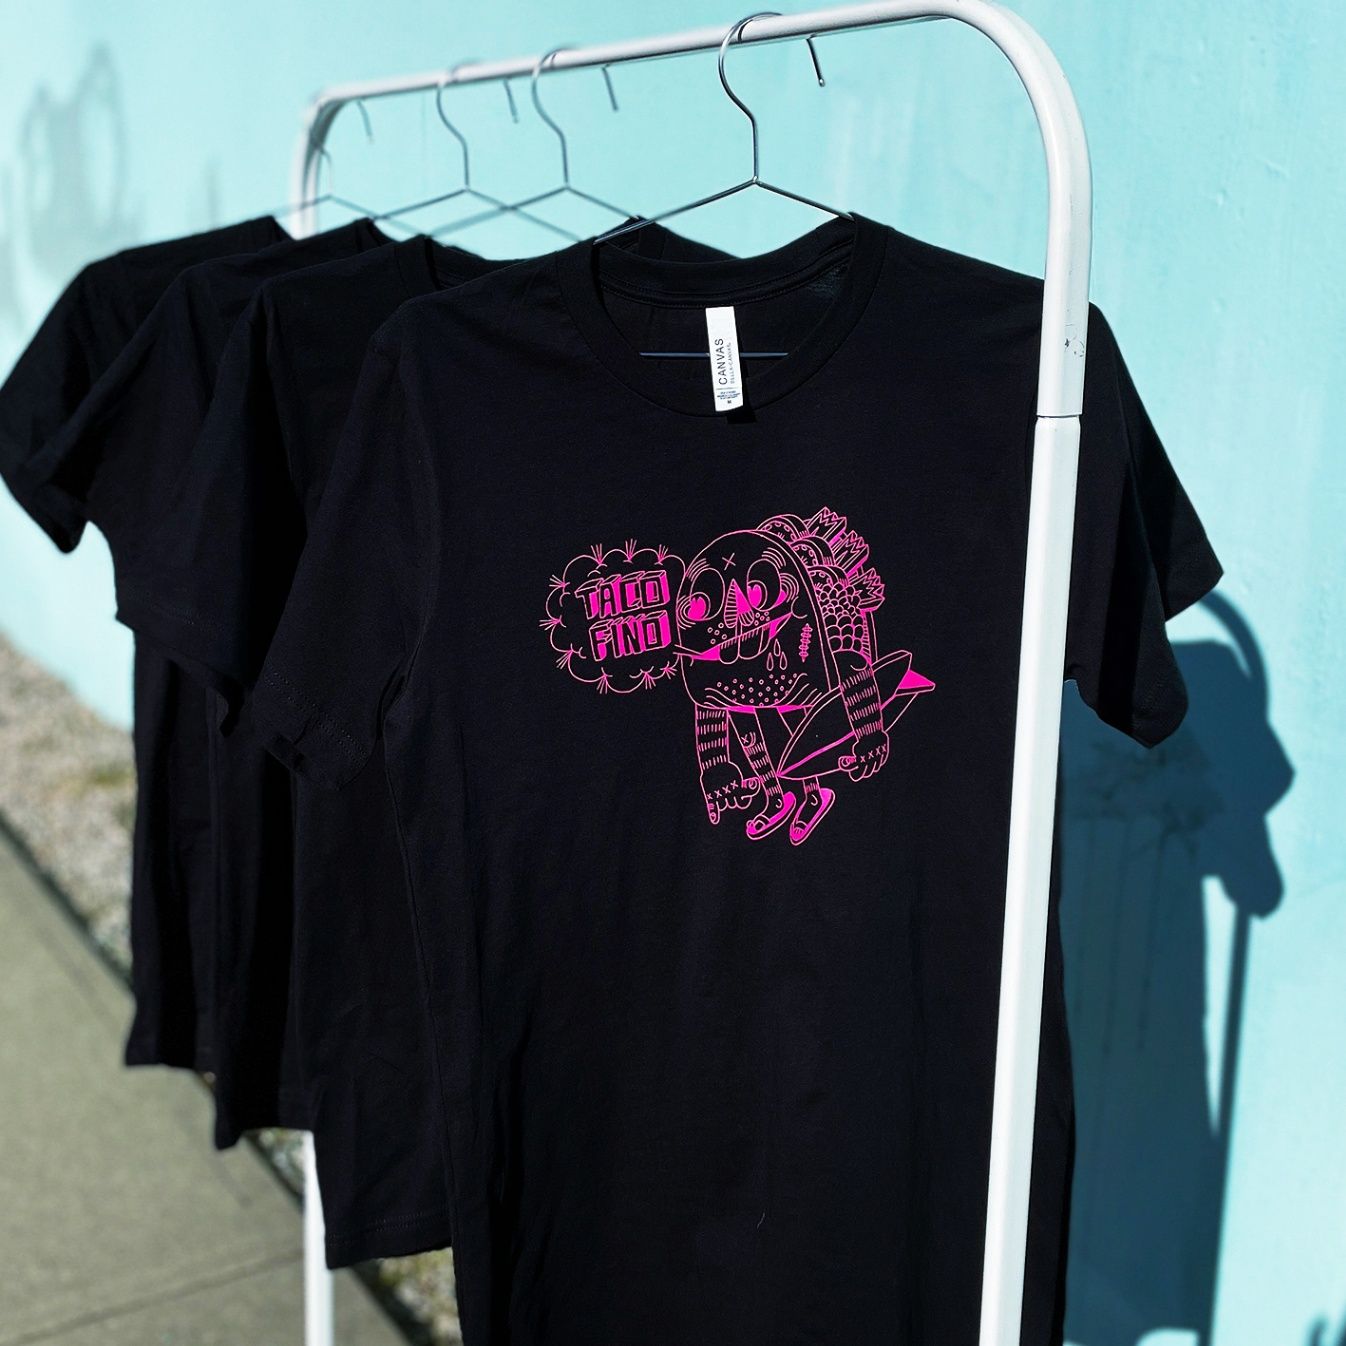 SWENN - Moray t-shirt - printed in Quebec